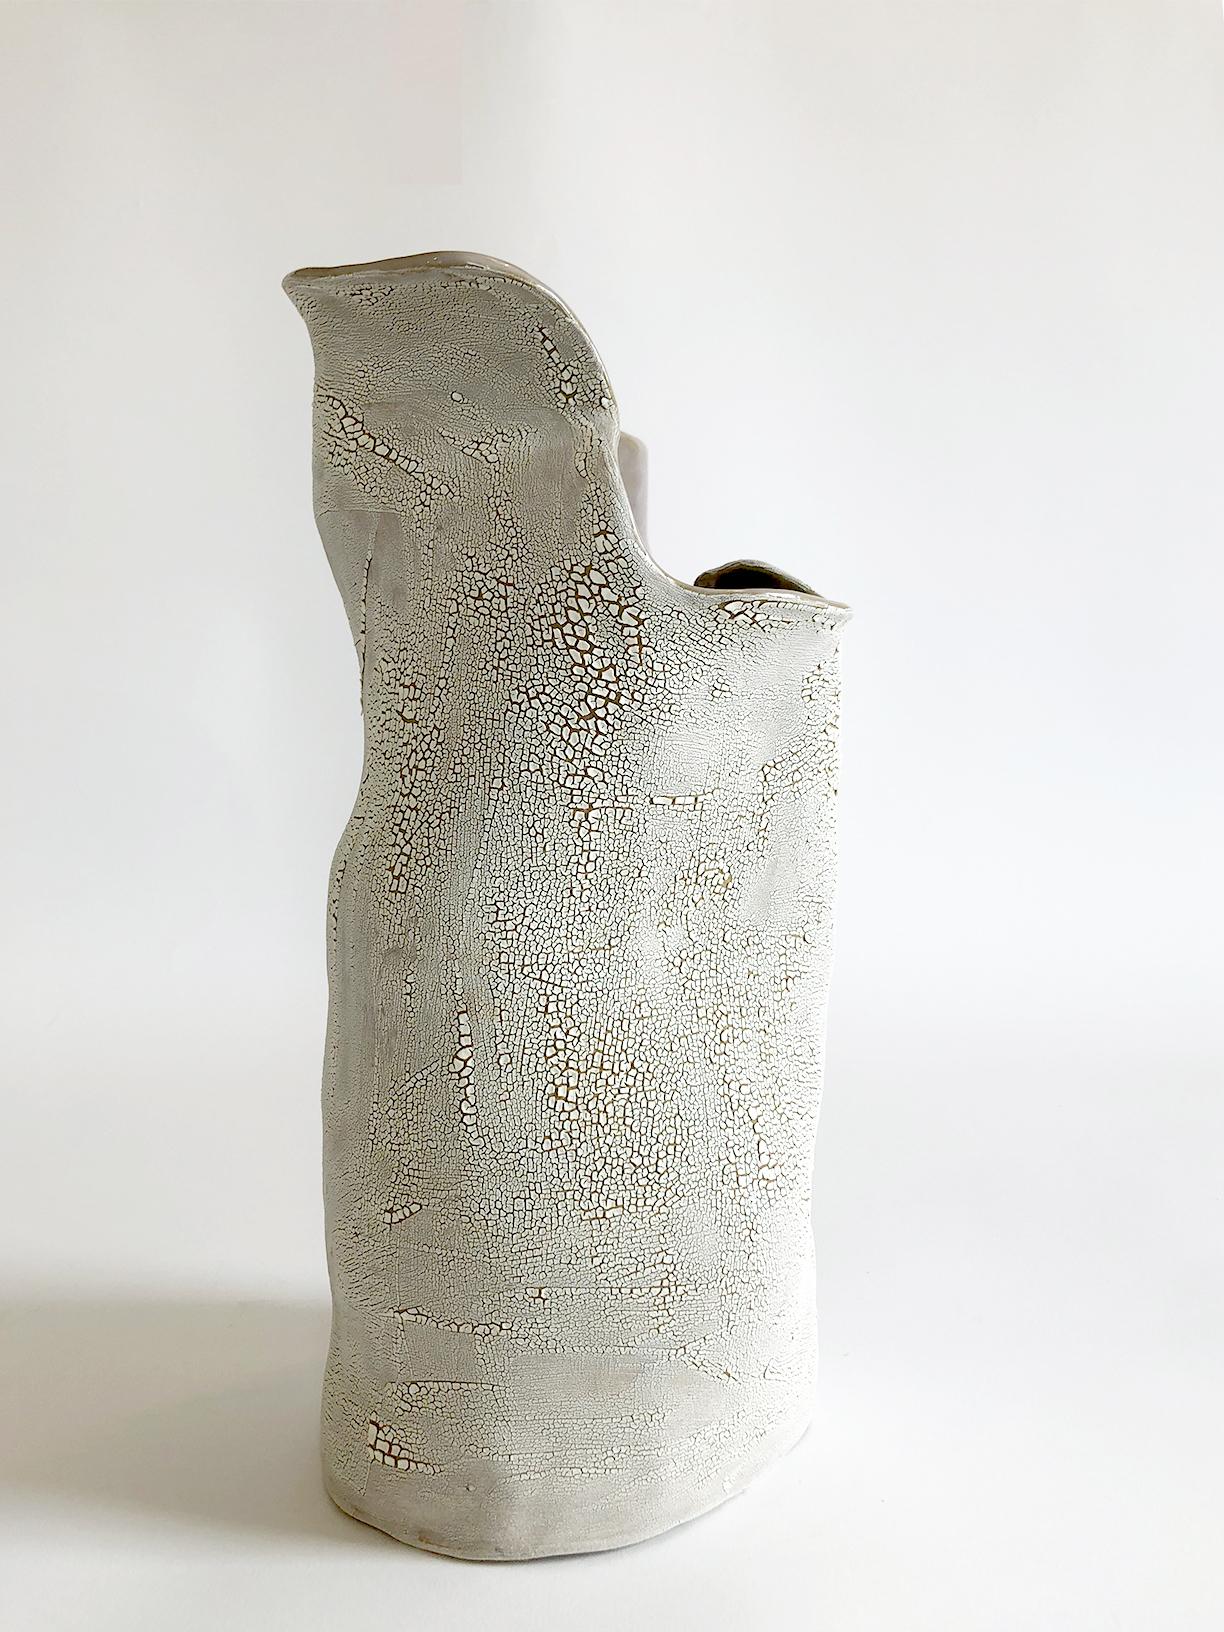 Visceral V. Glaze ceramic sculpture - Contemporary Sculpture by Magda Von Hanau